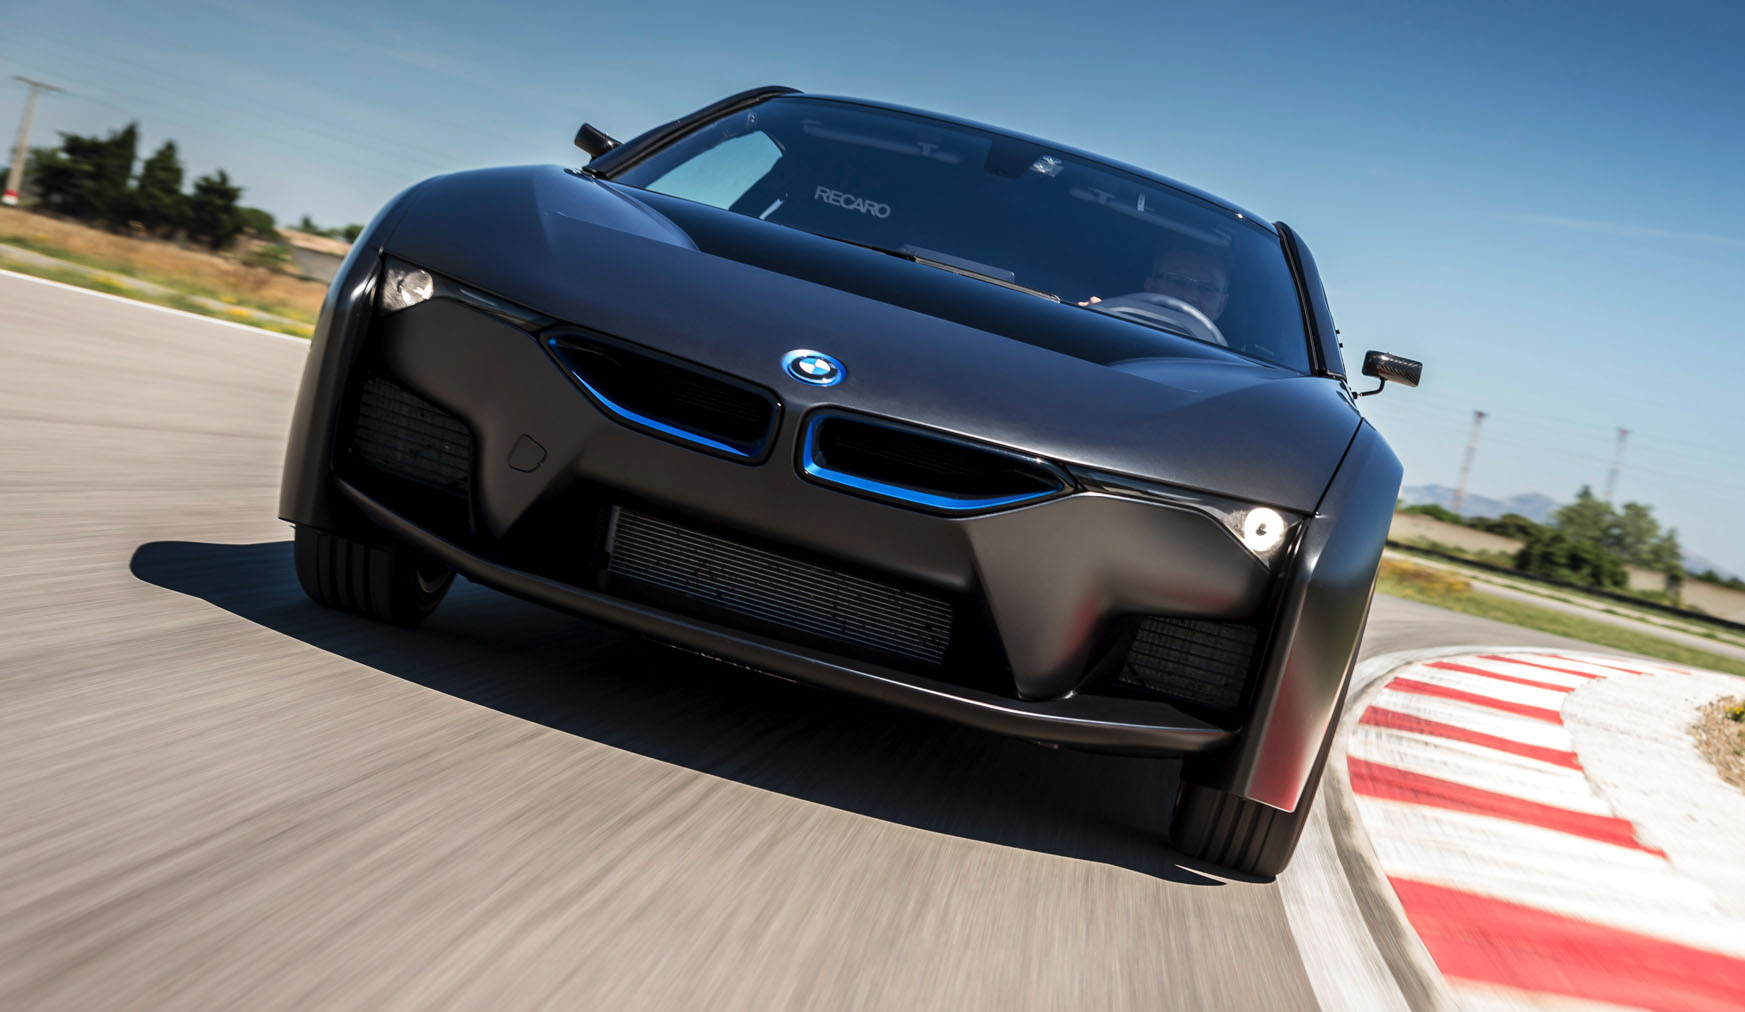 BMW-i8-hydrogen-fuel-cell-images-05